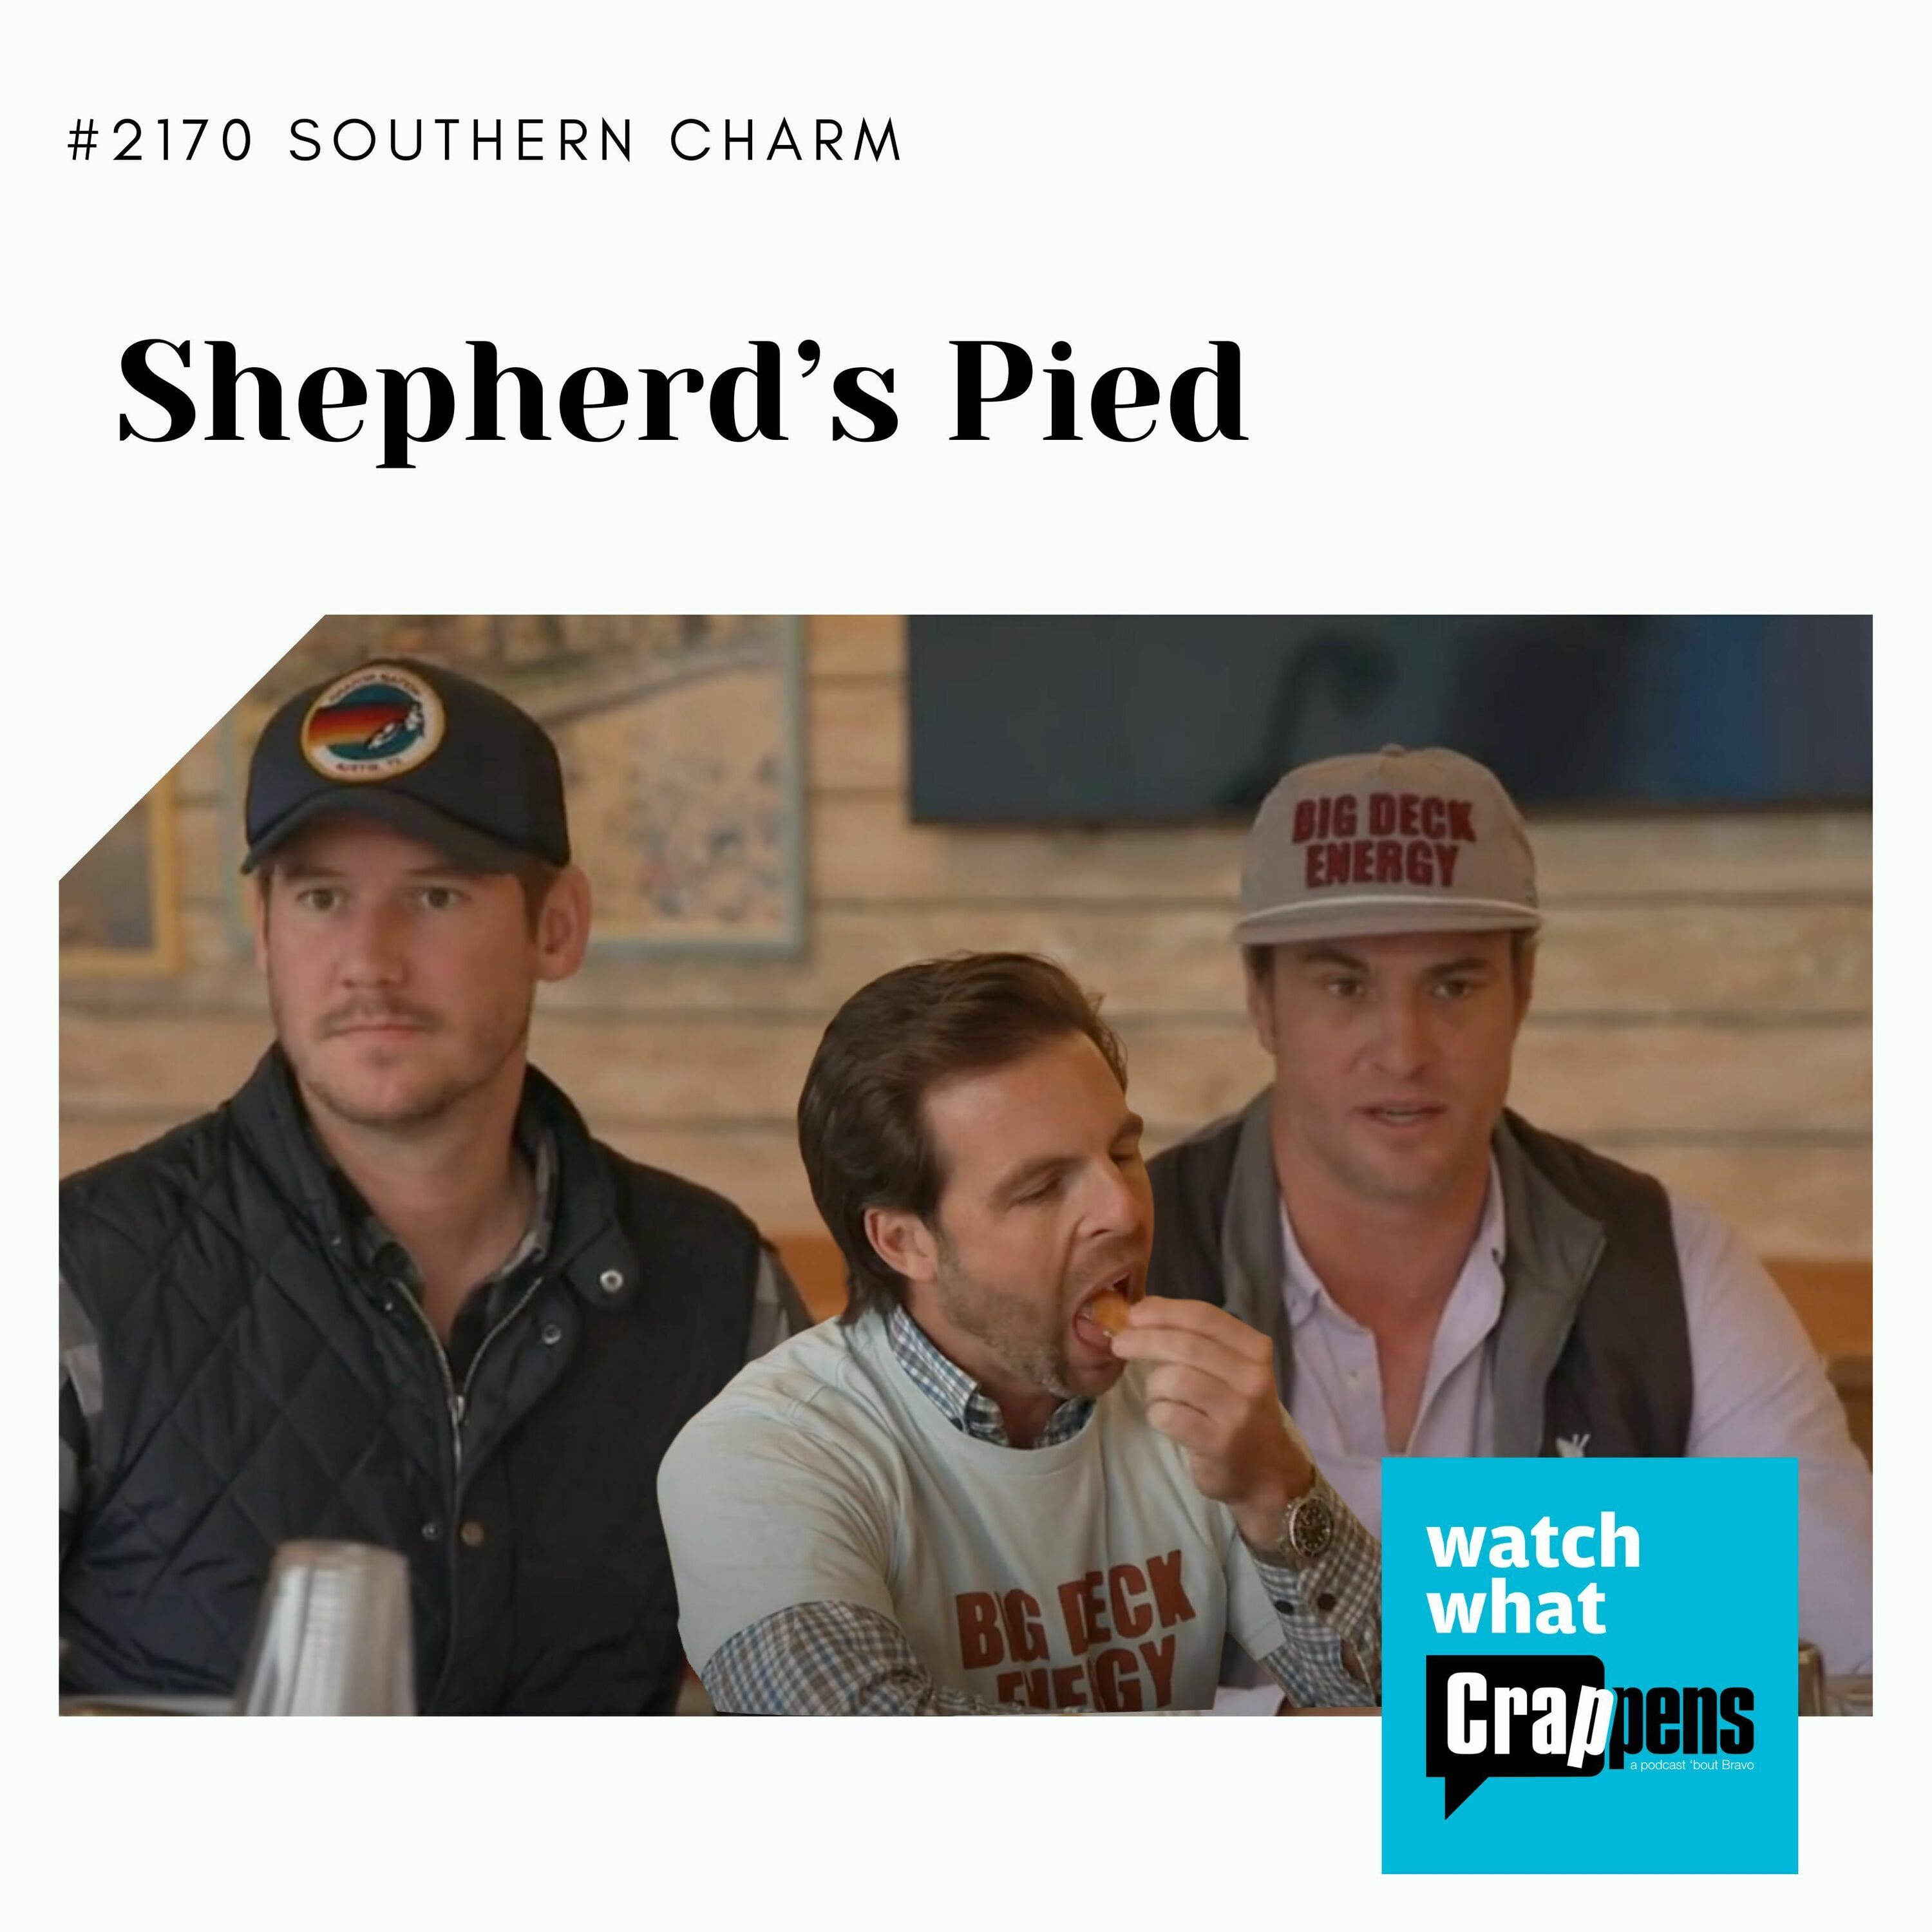 #2170 Southern Charm: Shepherd’s Pied